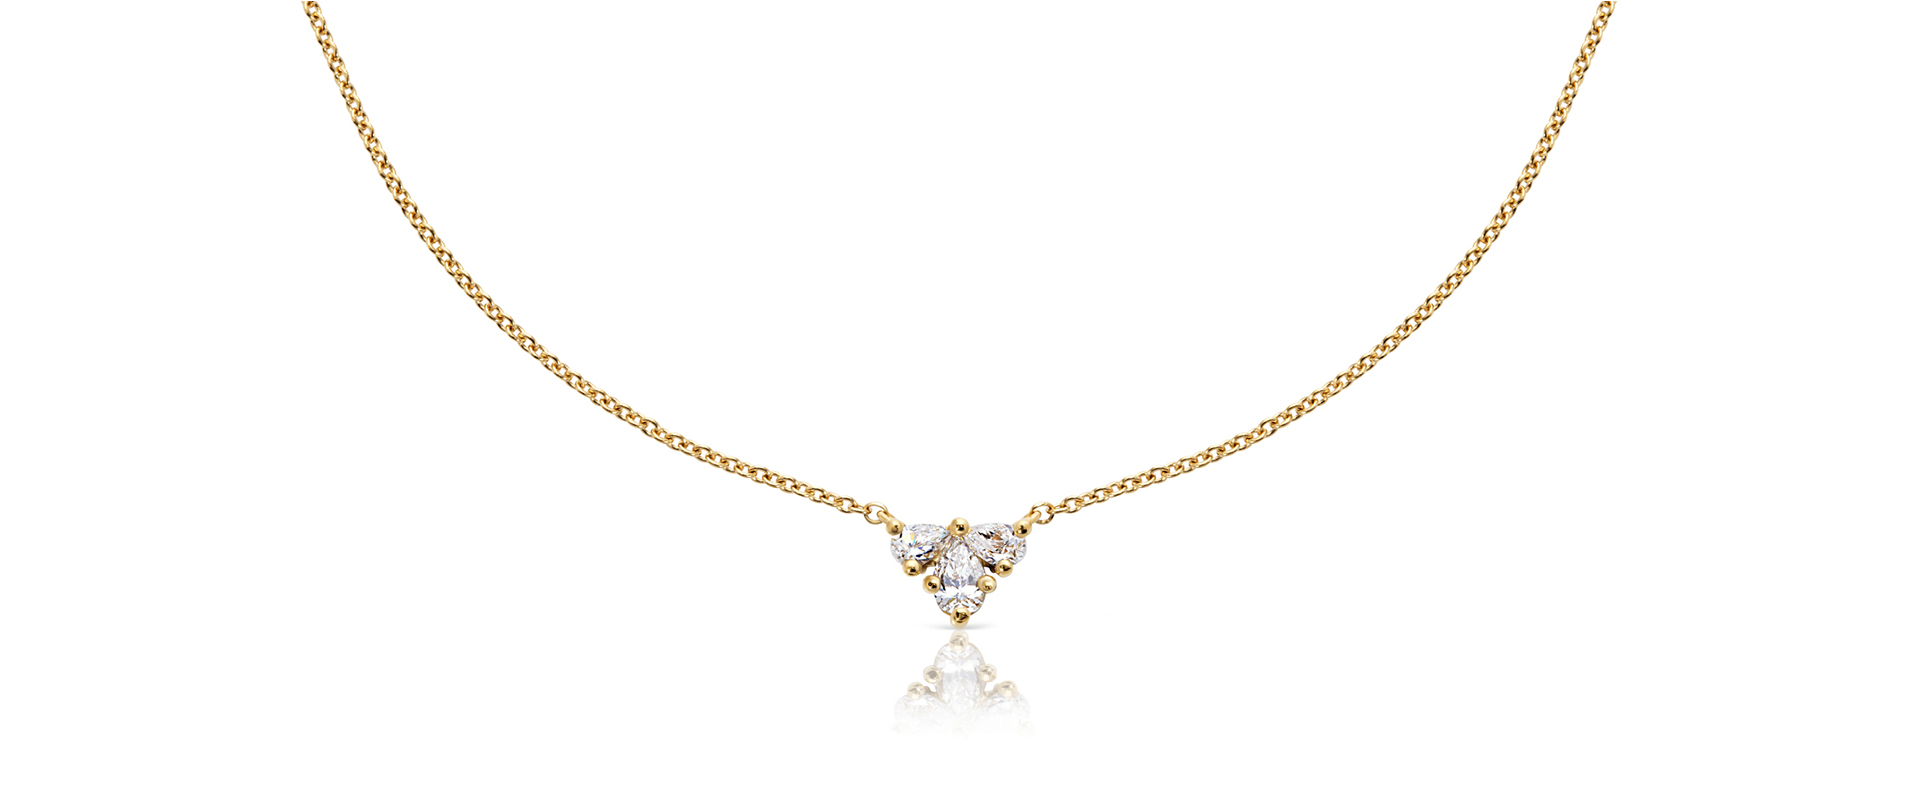 Astral bridal pendant - pear trio diamond cluster - yellow gold